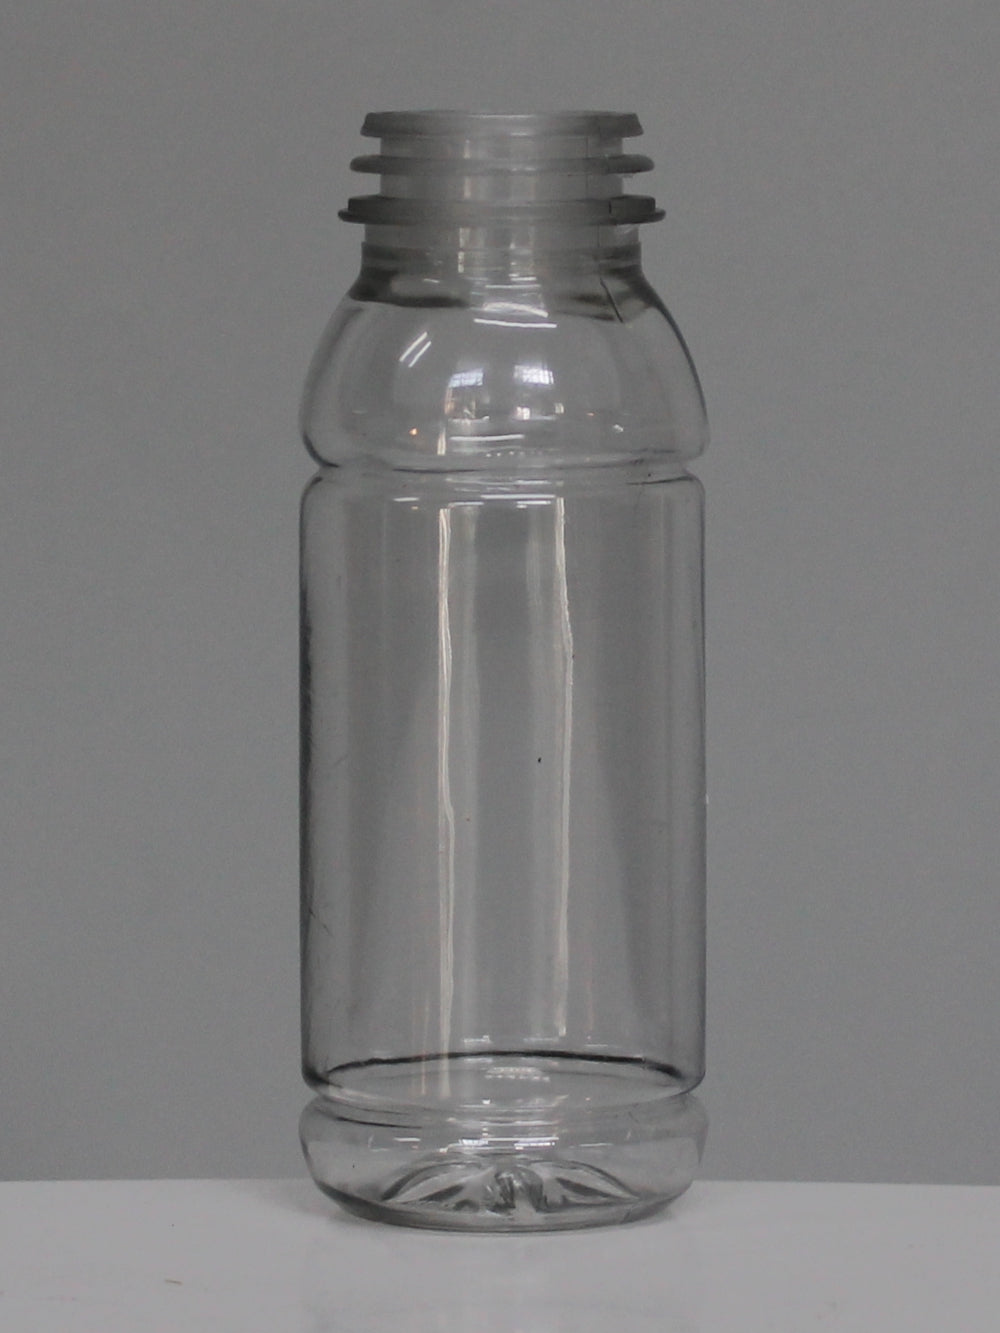 100ml Oil PET Bottle - (Box of 100 units)